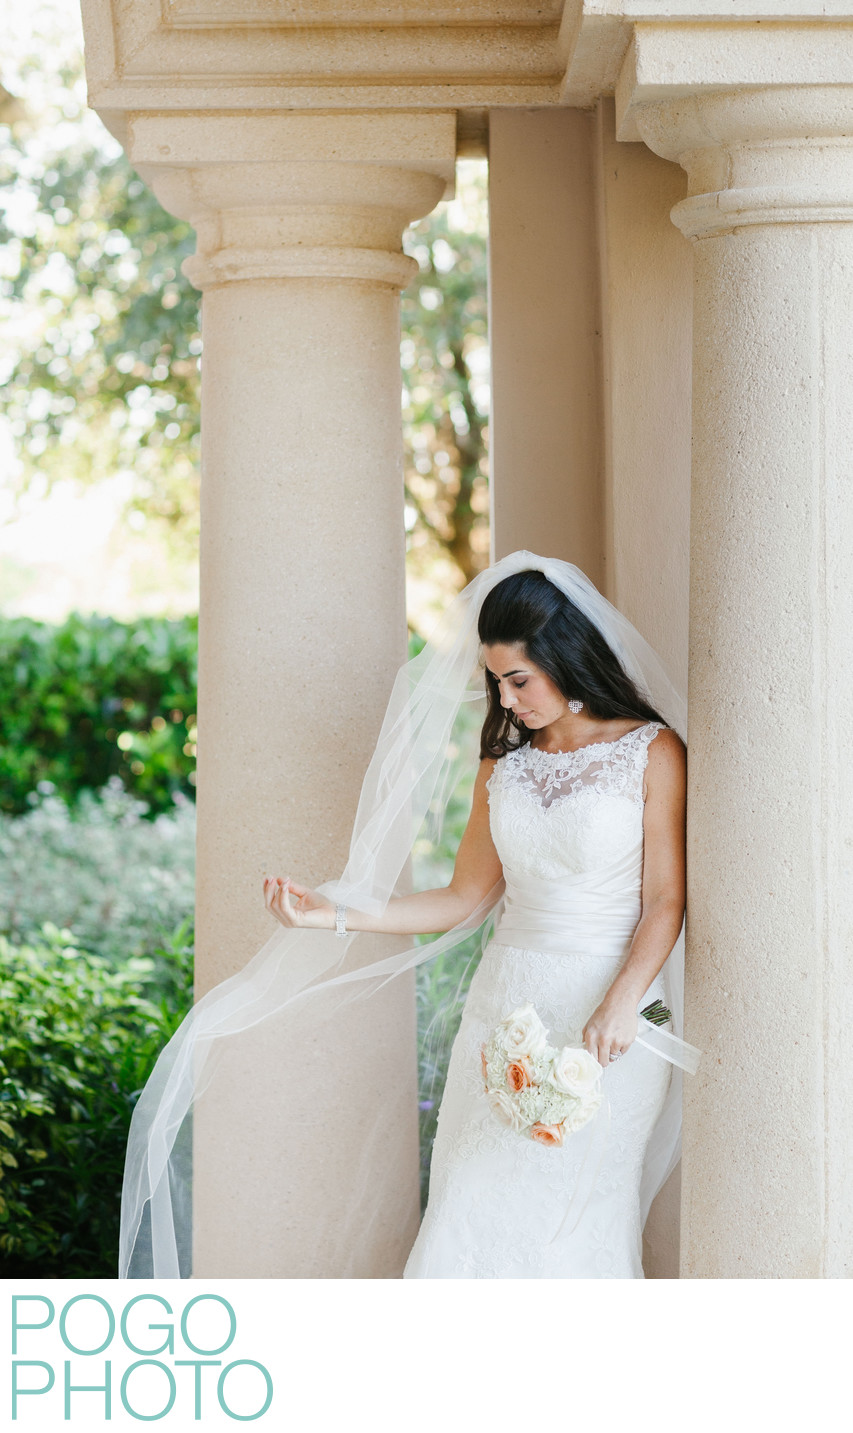 South Florida Photographer Creates Dreamy Bridal Photo